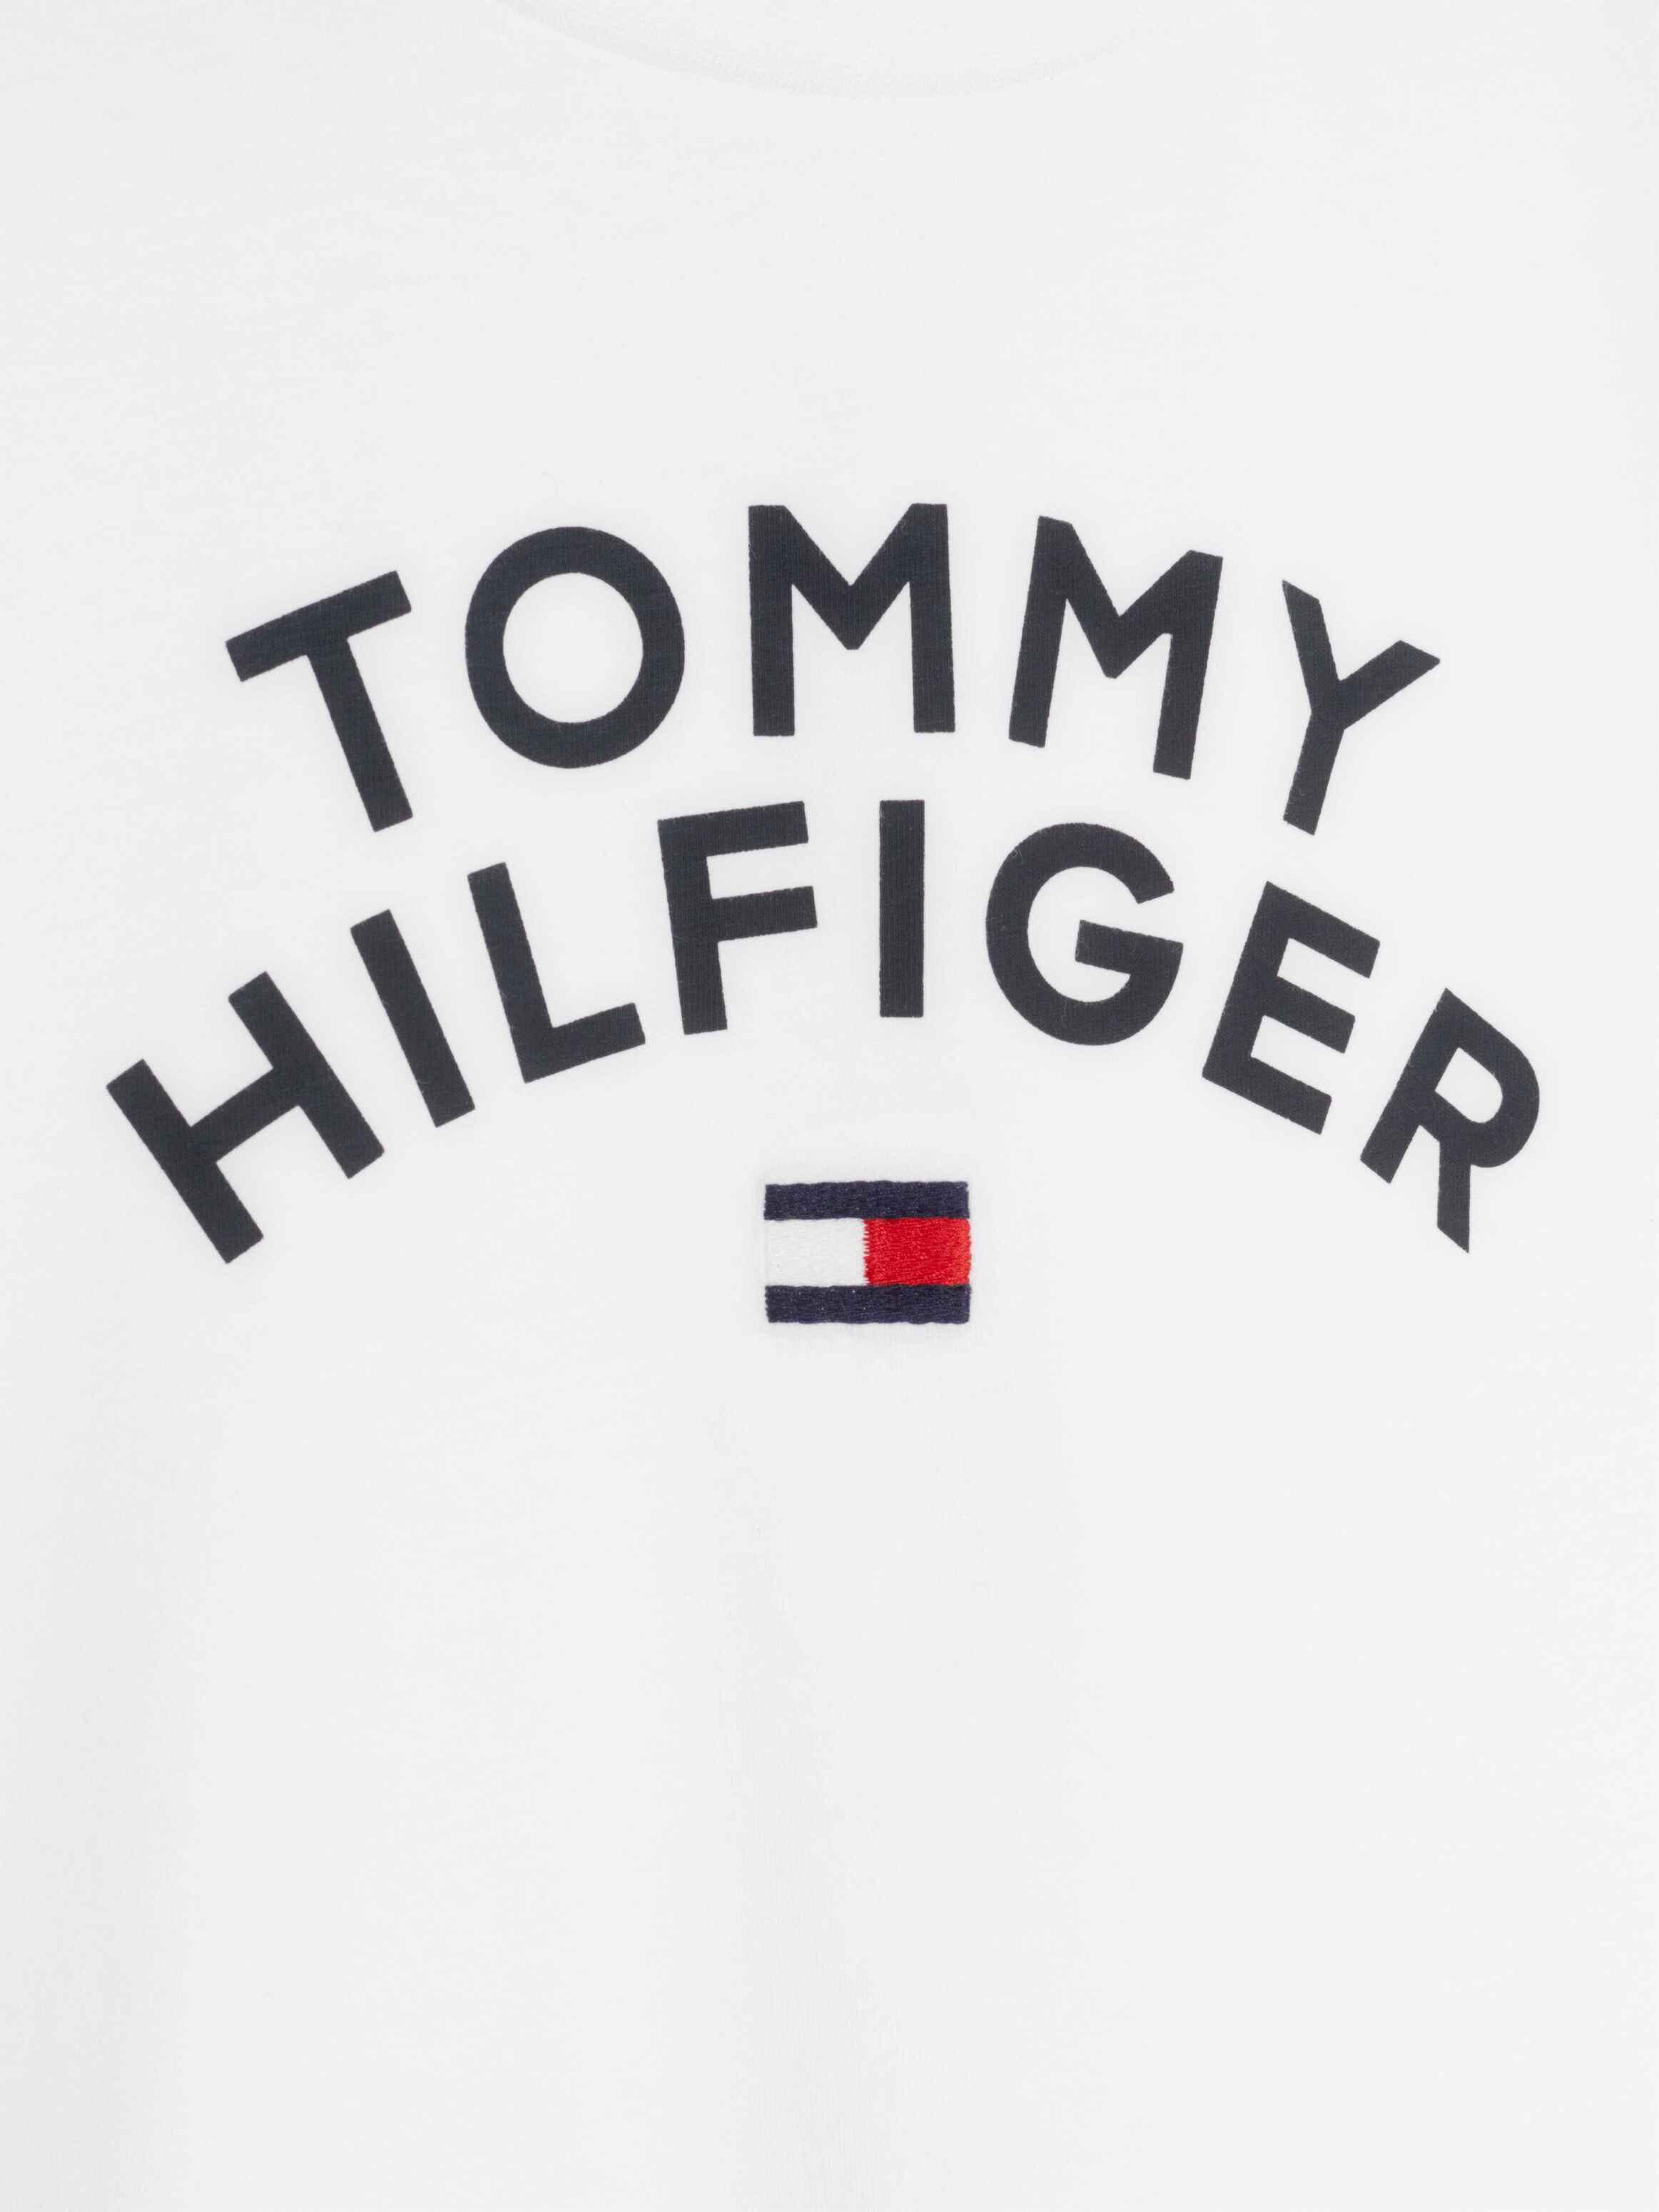 TOMMY HILFIGER - HILFIGER FLAG TEE SS - KB0KB08548